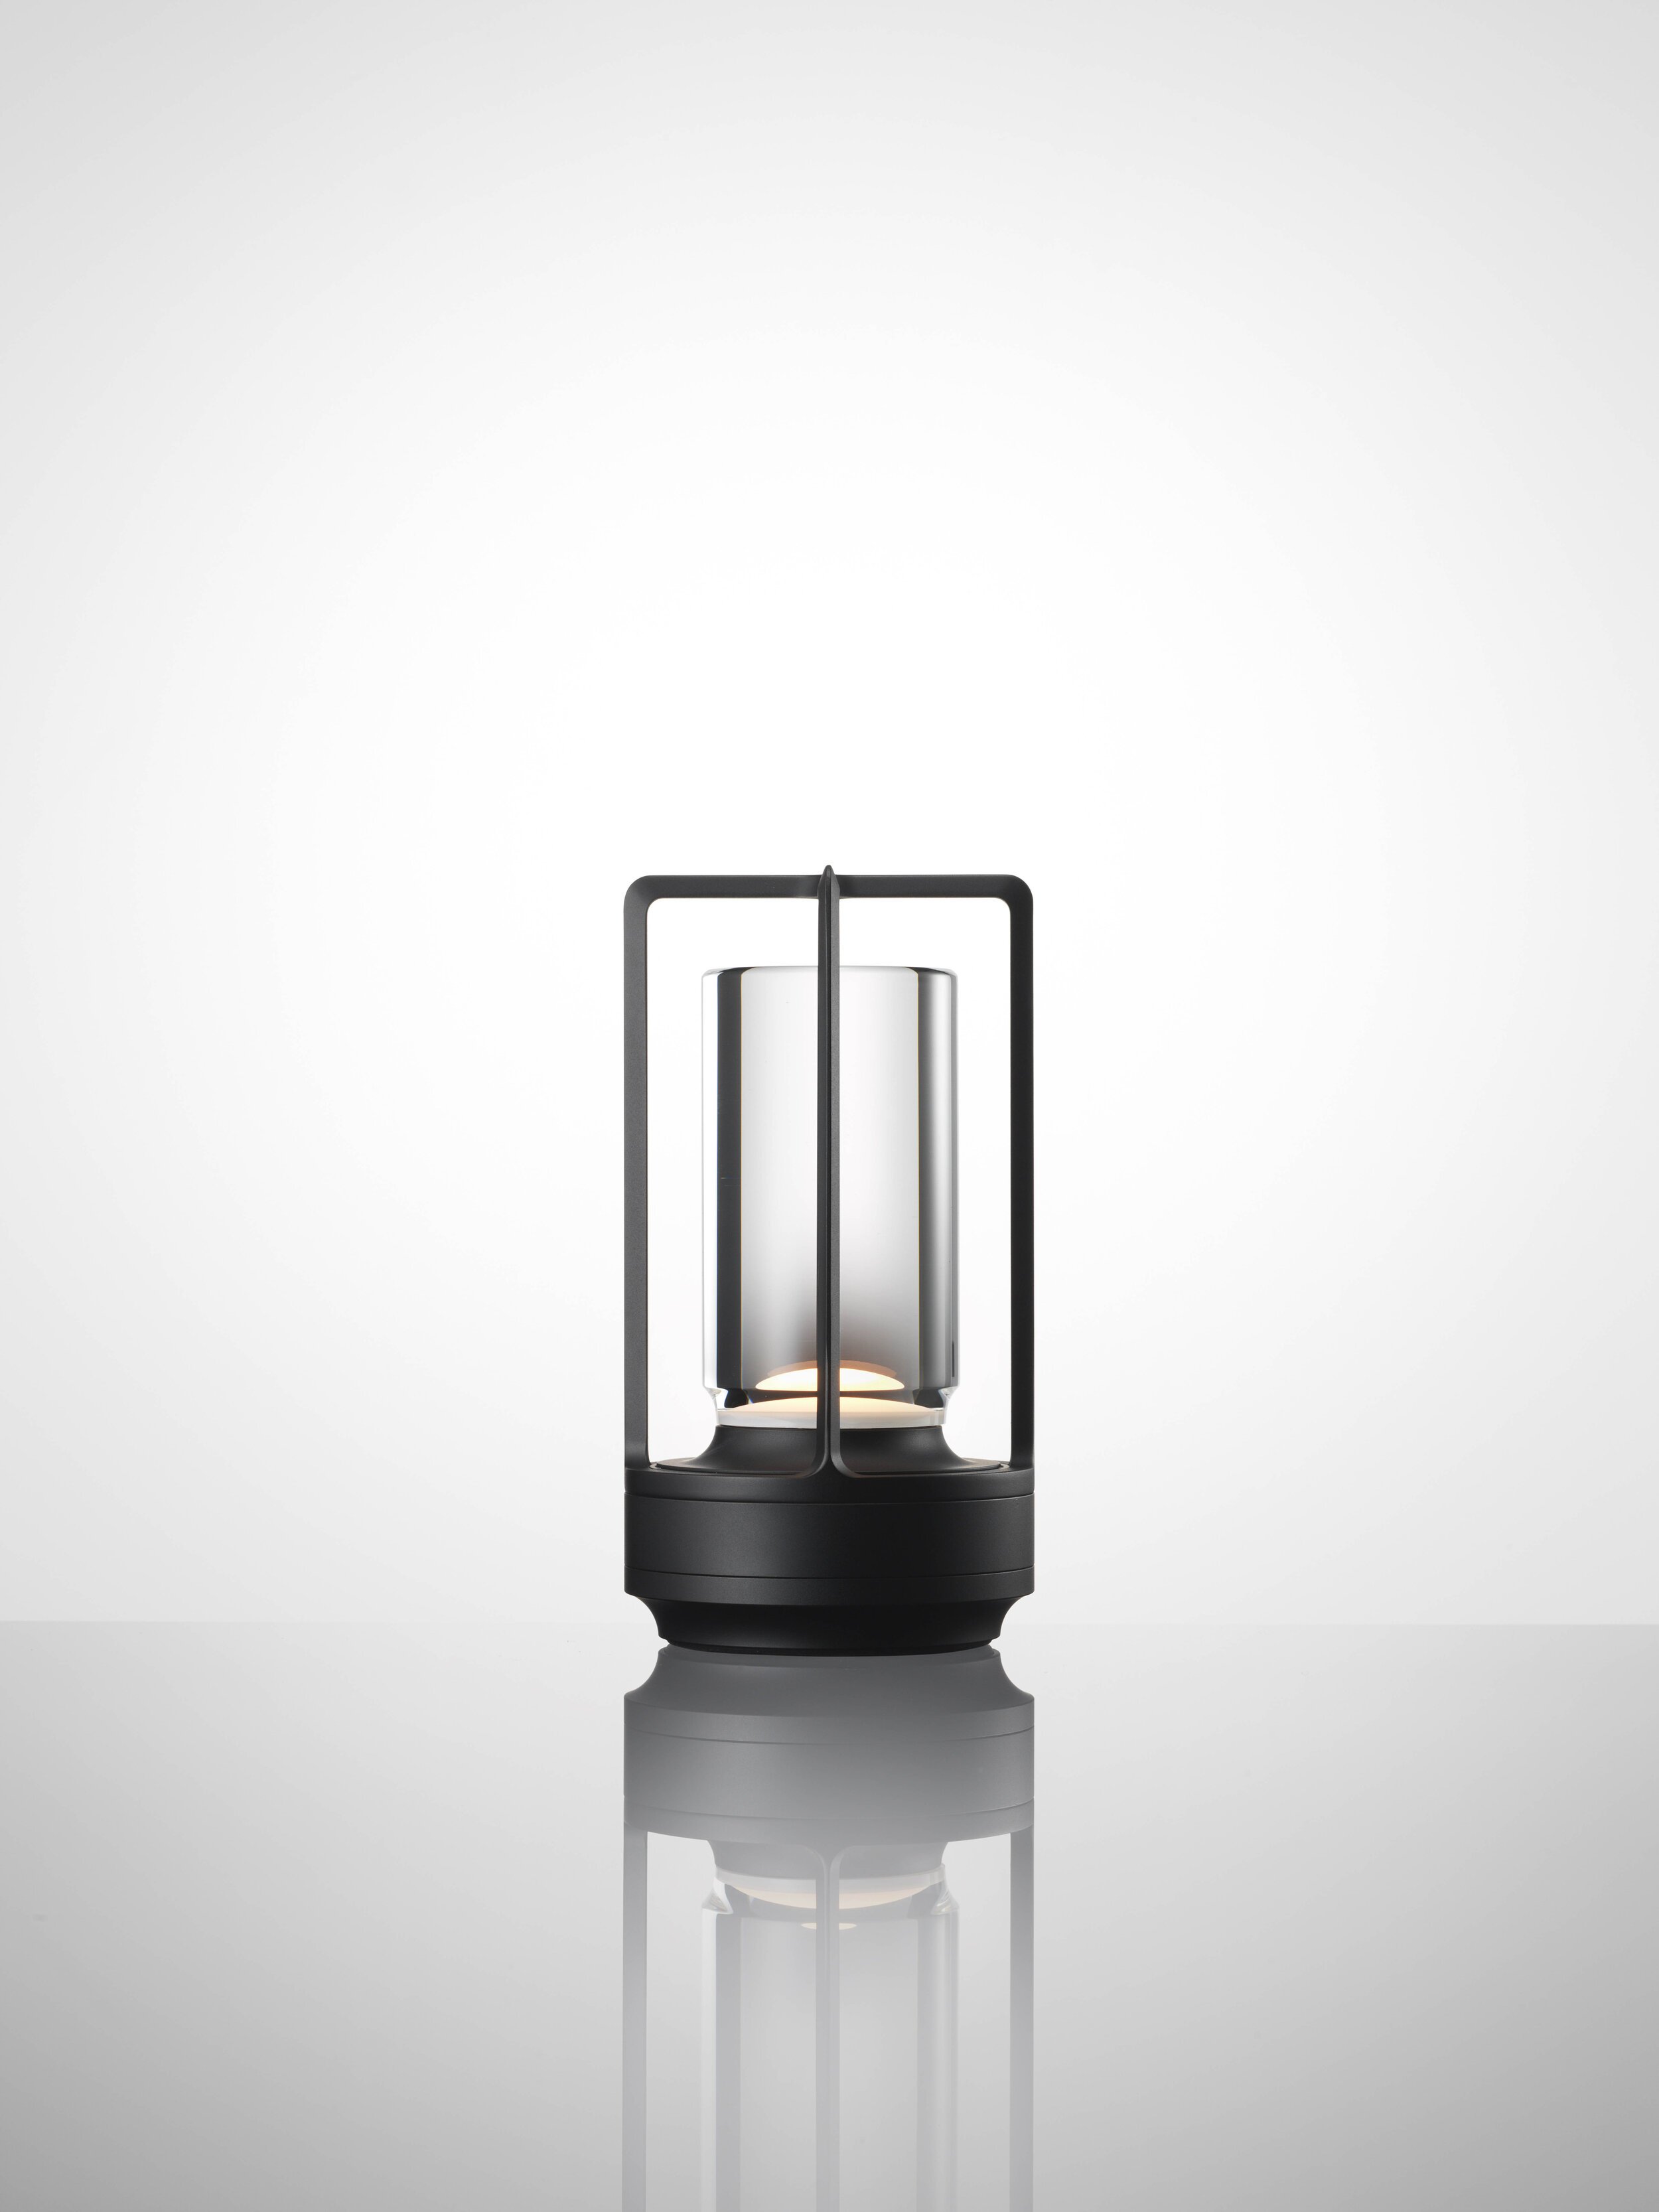  Nao Tamura 田村奈穂がデザインを手掛けた、アンビエンテックの照明器具「TURN+（ターンプラス）」。アルミニウムブラック 